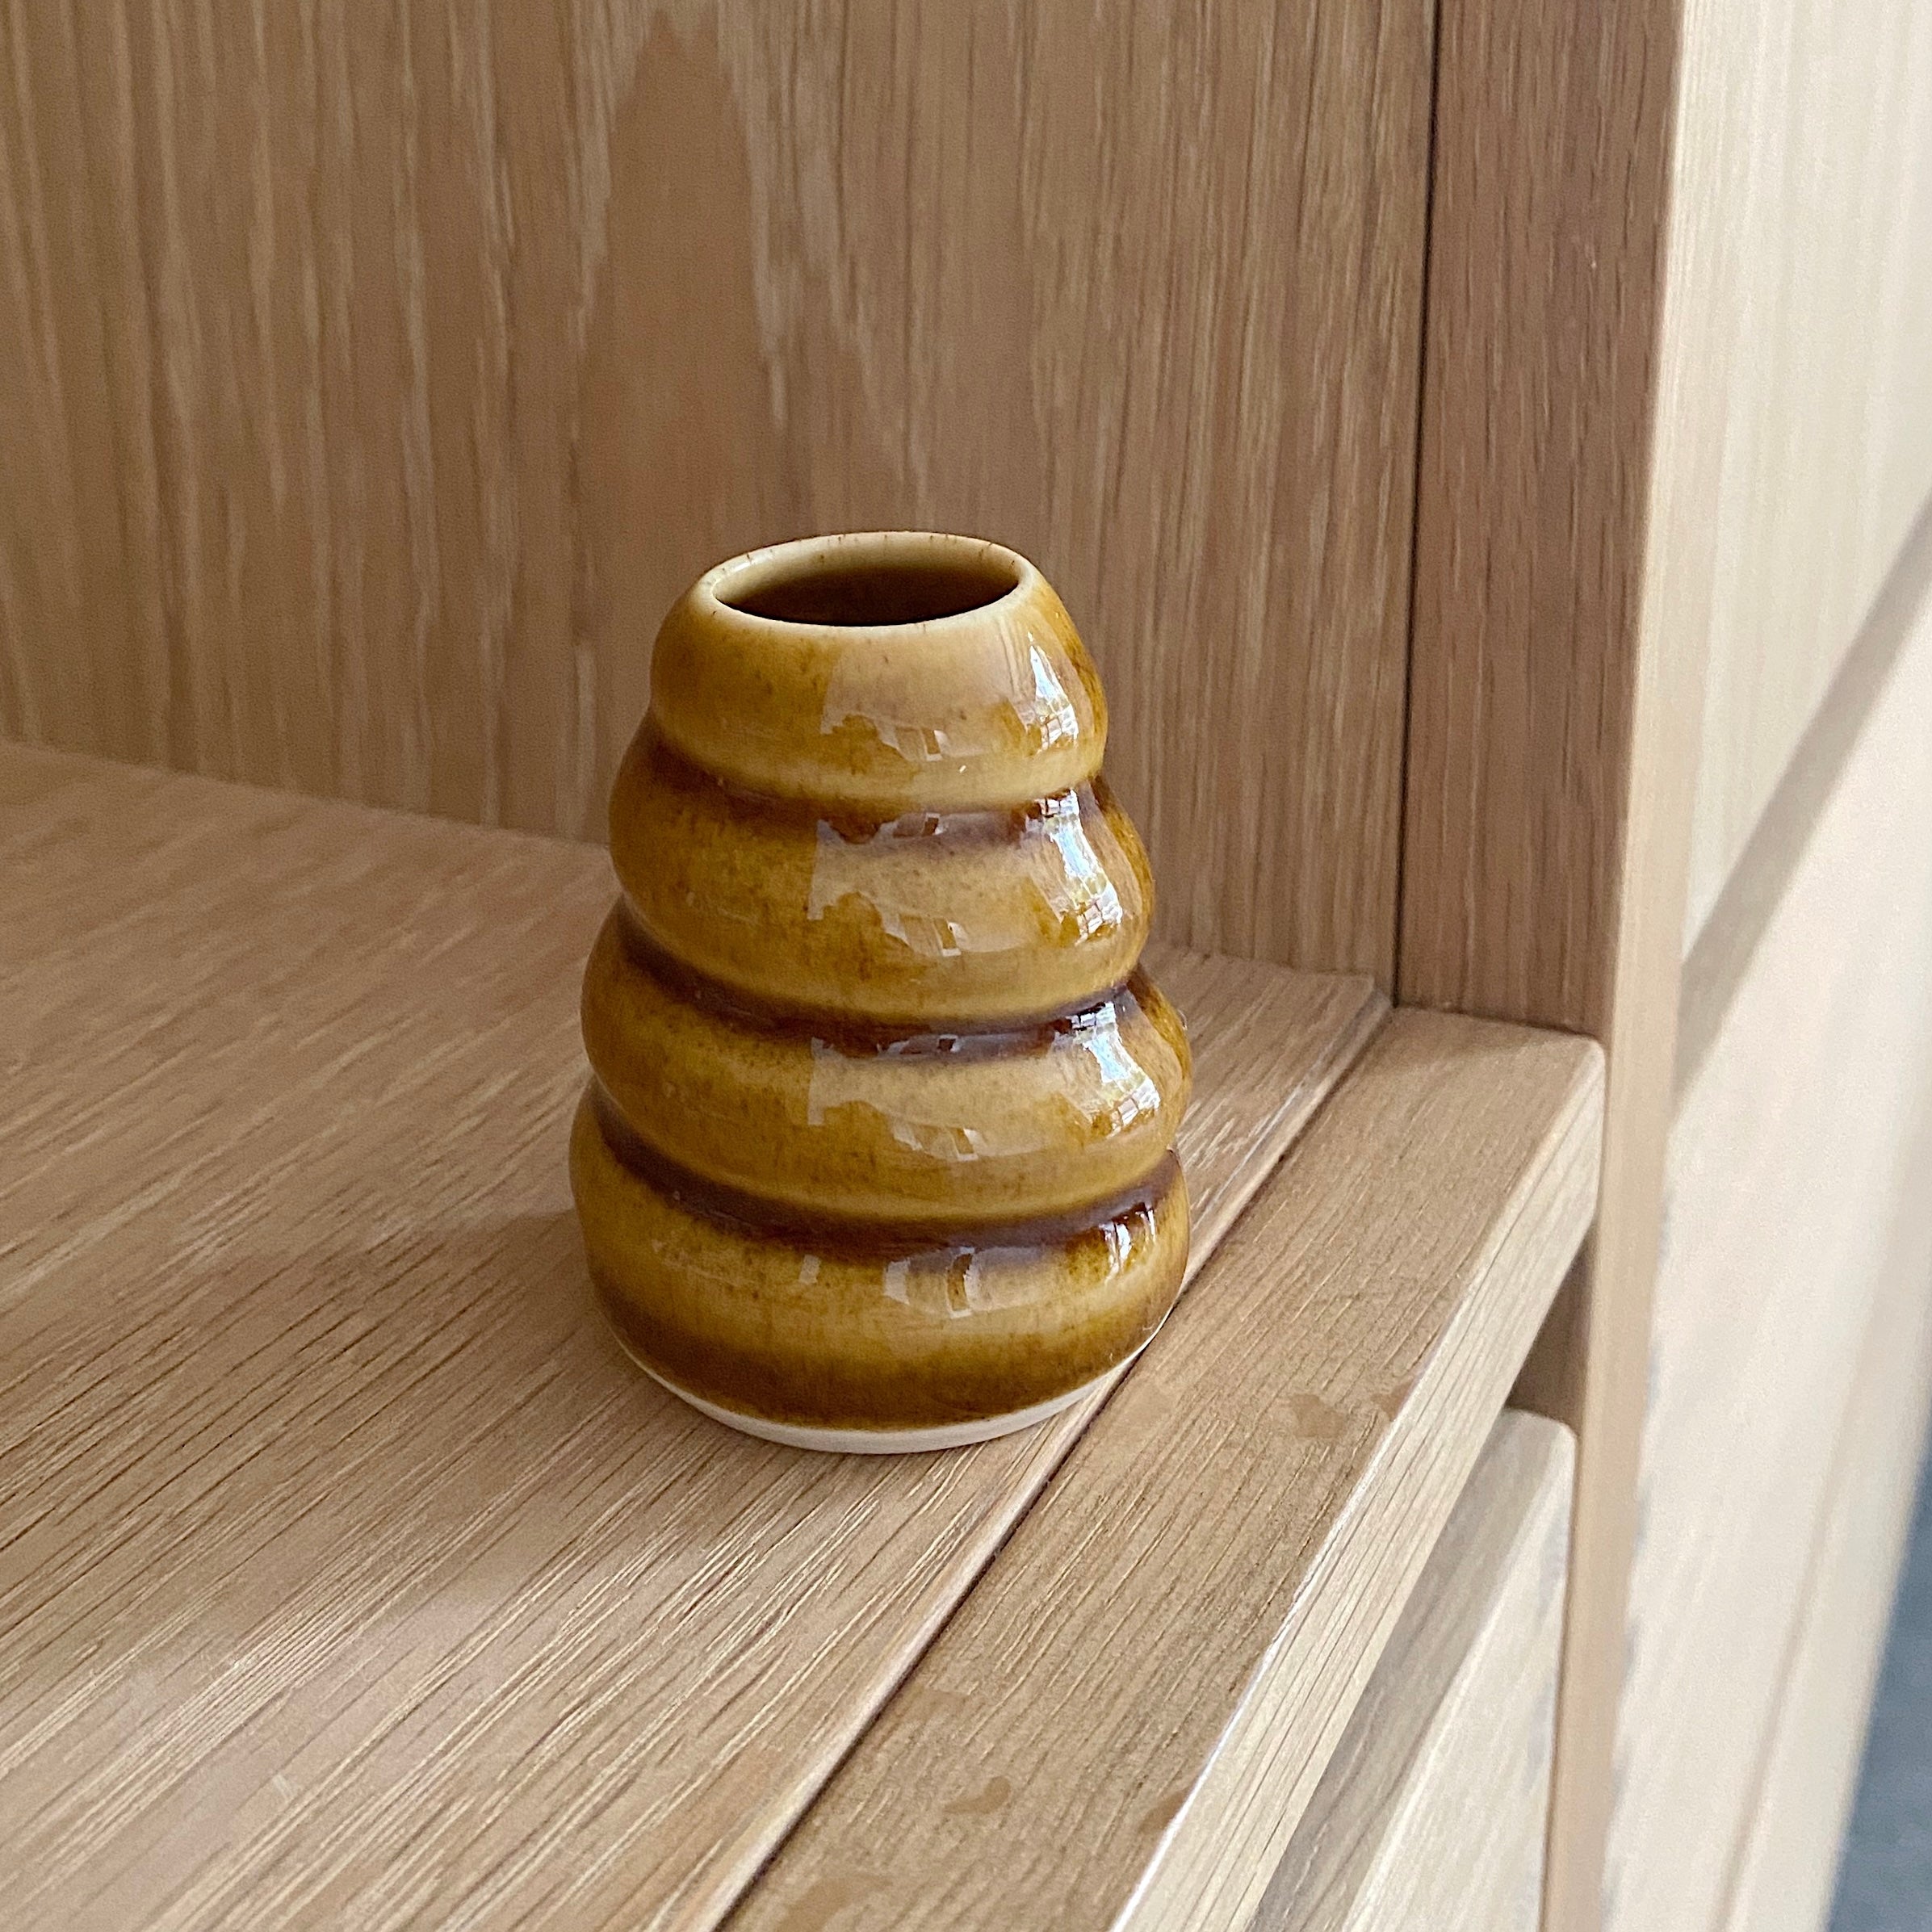 lille haandlavet vase i smuk gylden brun glasur. vasen har et snoet spiraldesign rundt om vasen